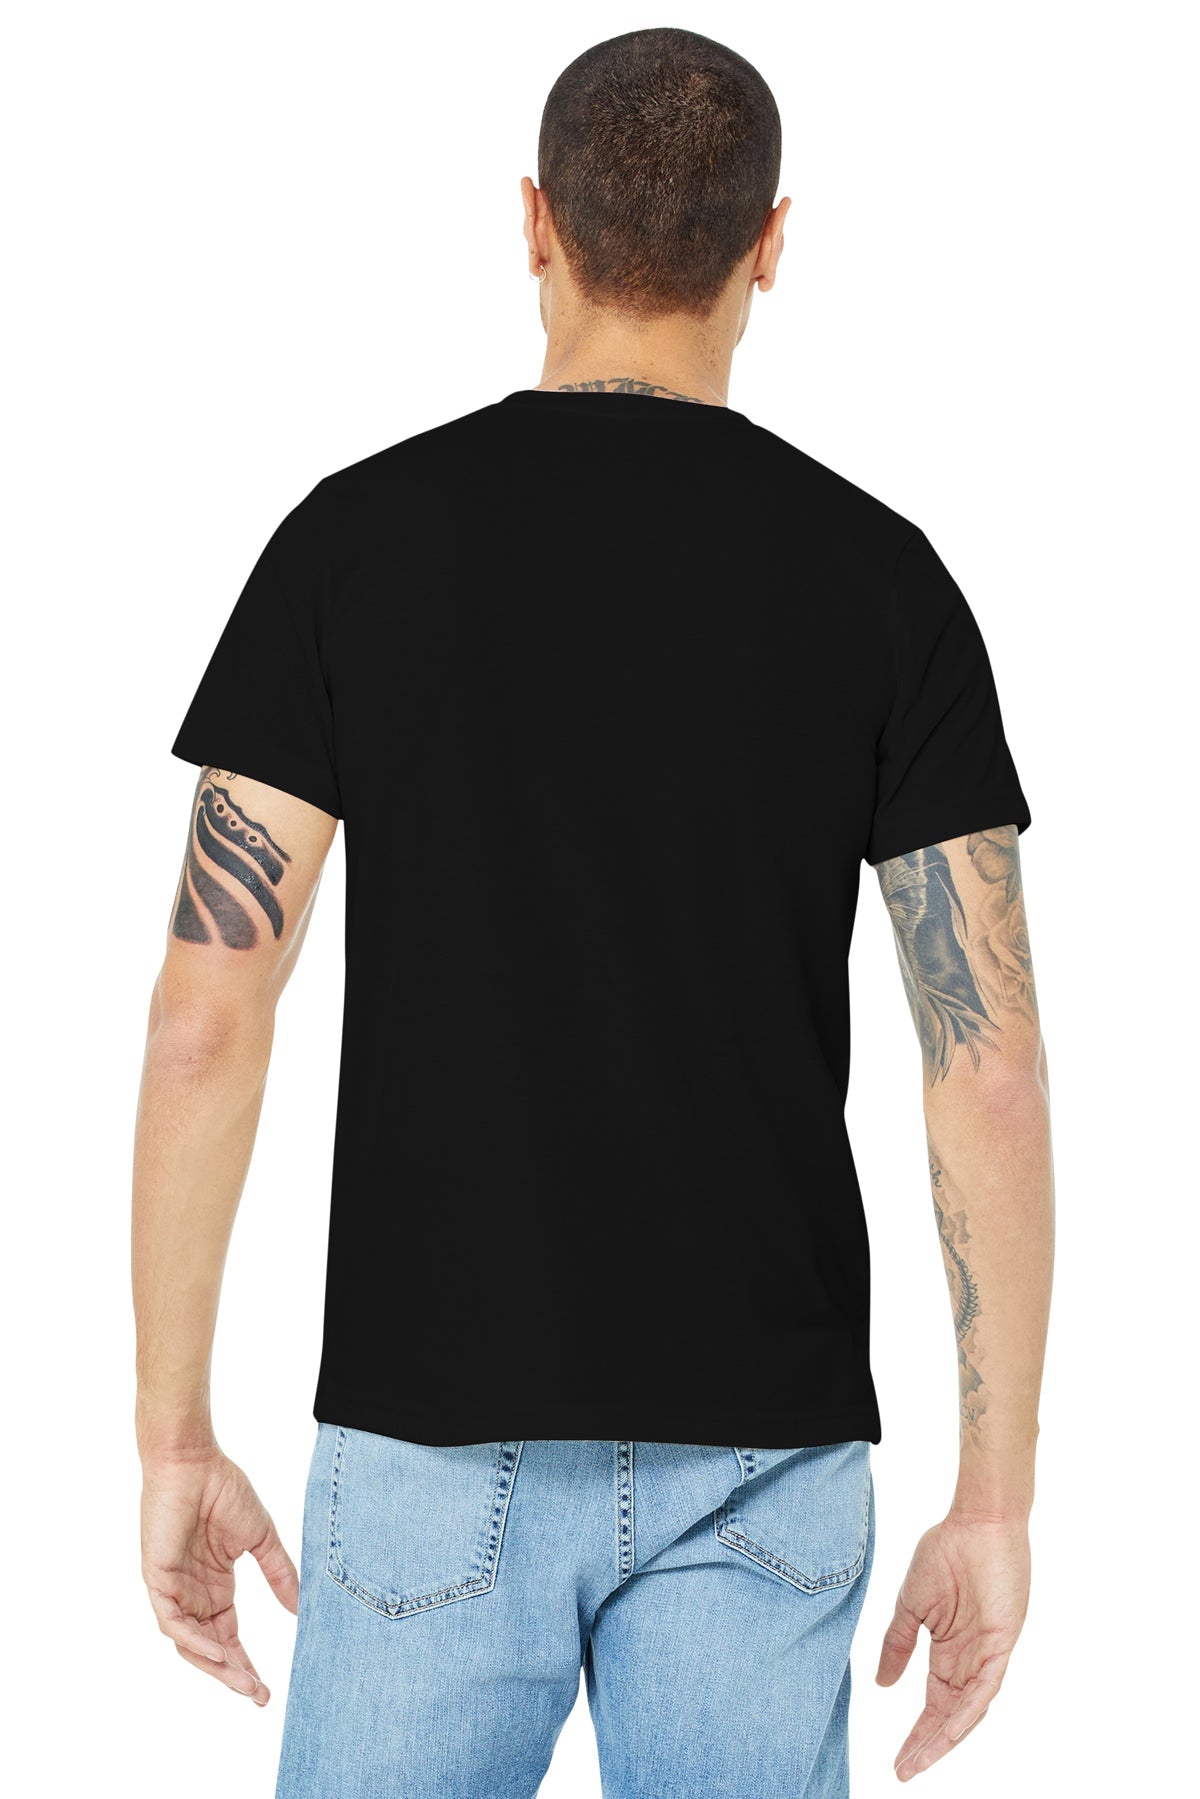 bella + canvas unisex made in the usa jersey short sleeve t-shirt 3001u black